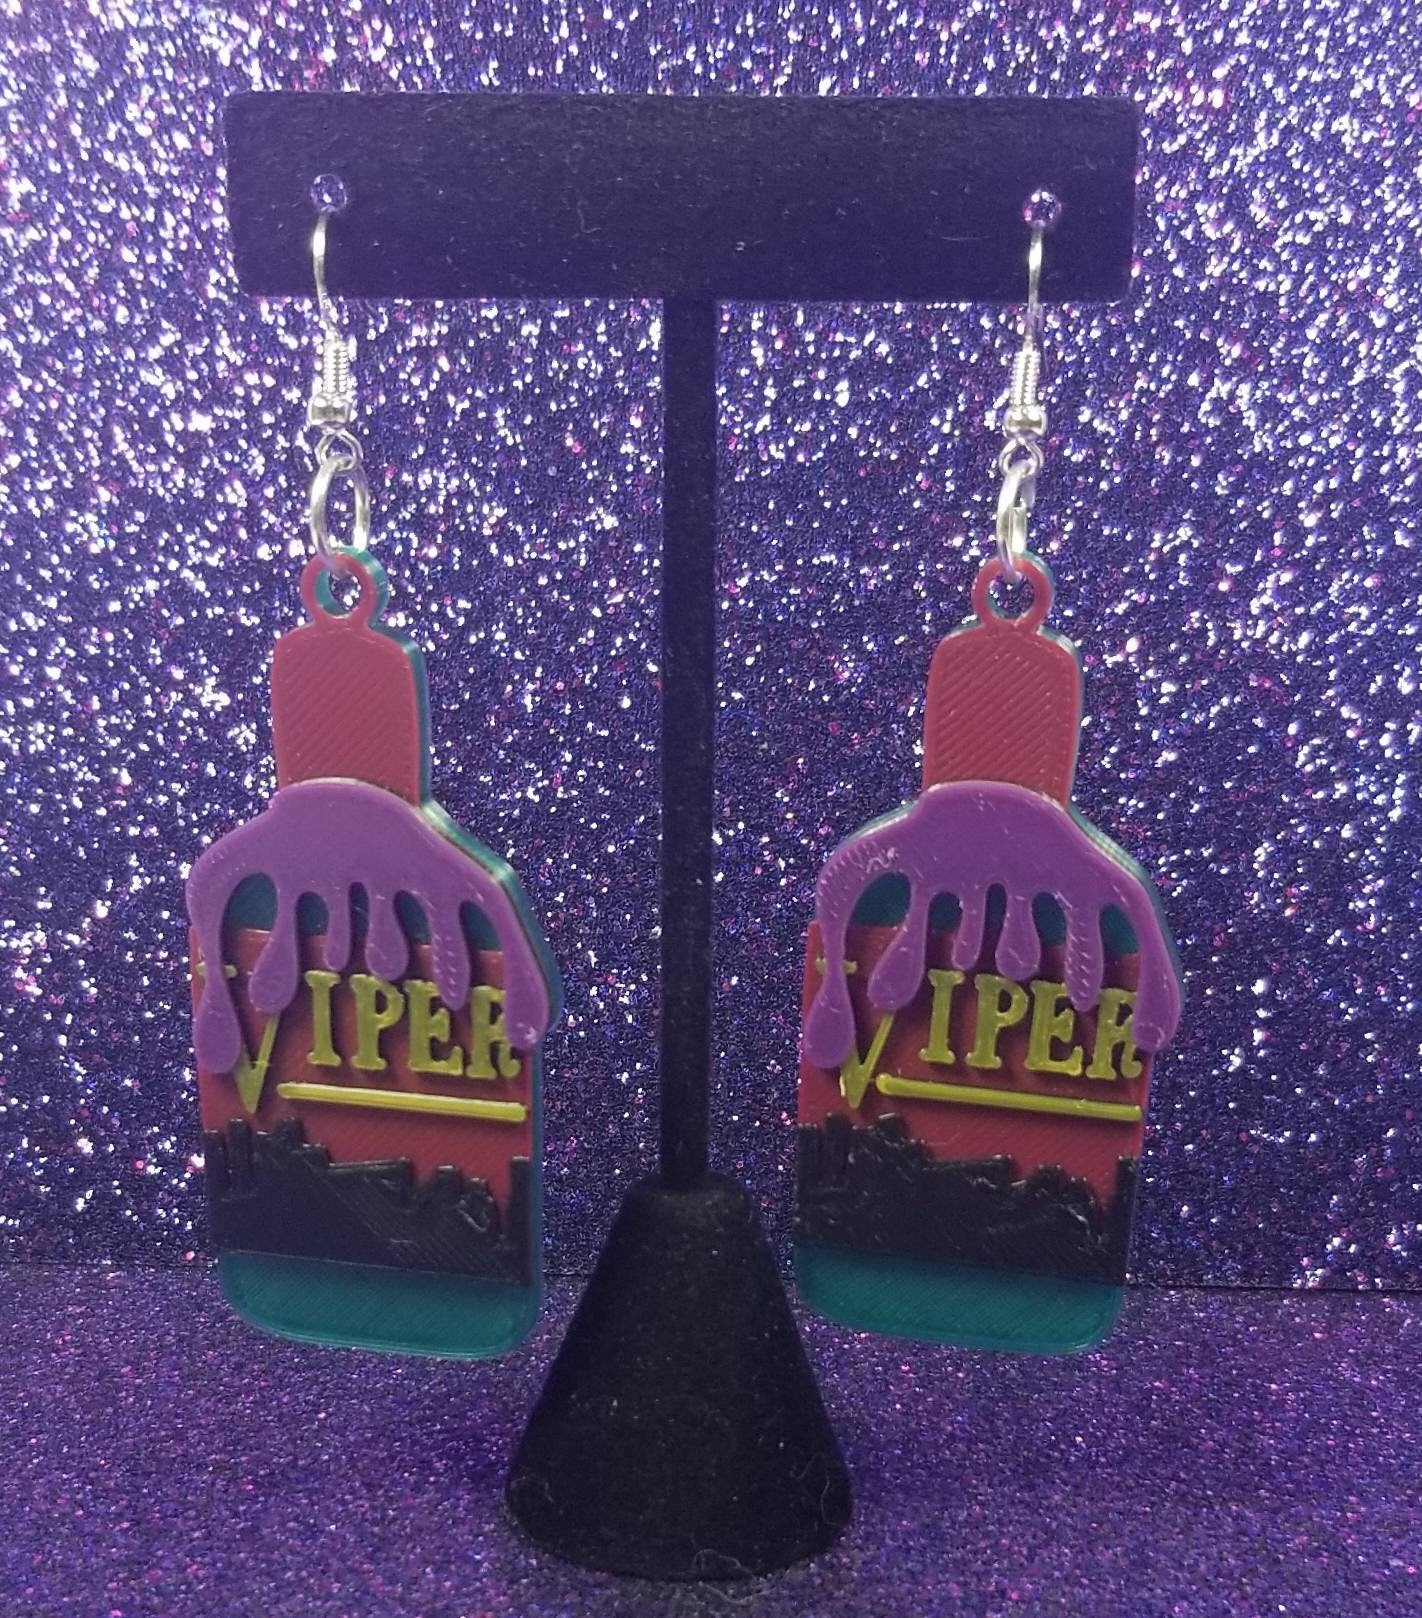 Viper Bottle Horror Movie Statement Earrings 3D Printed